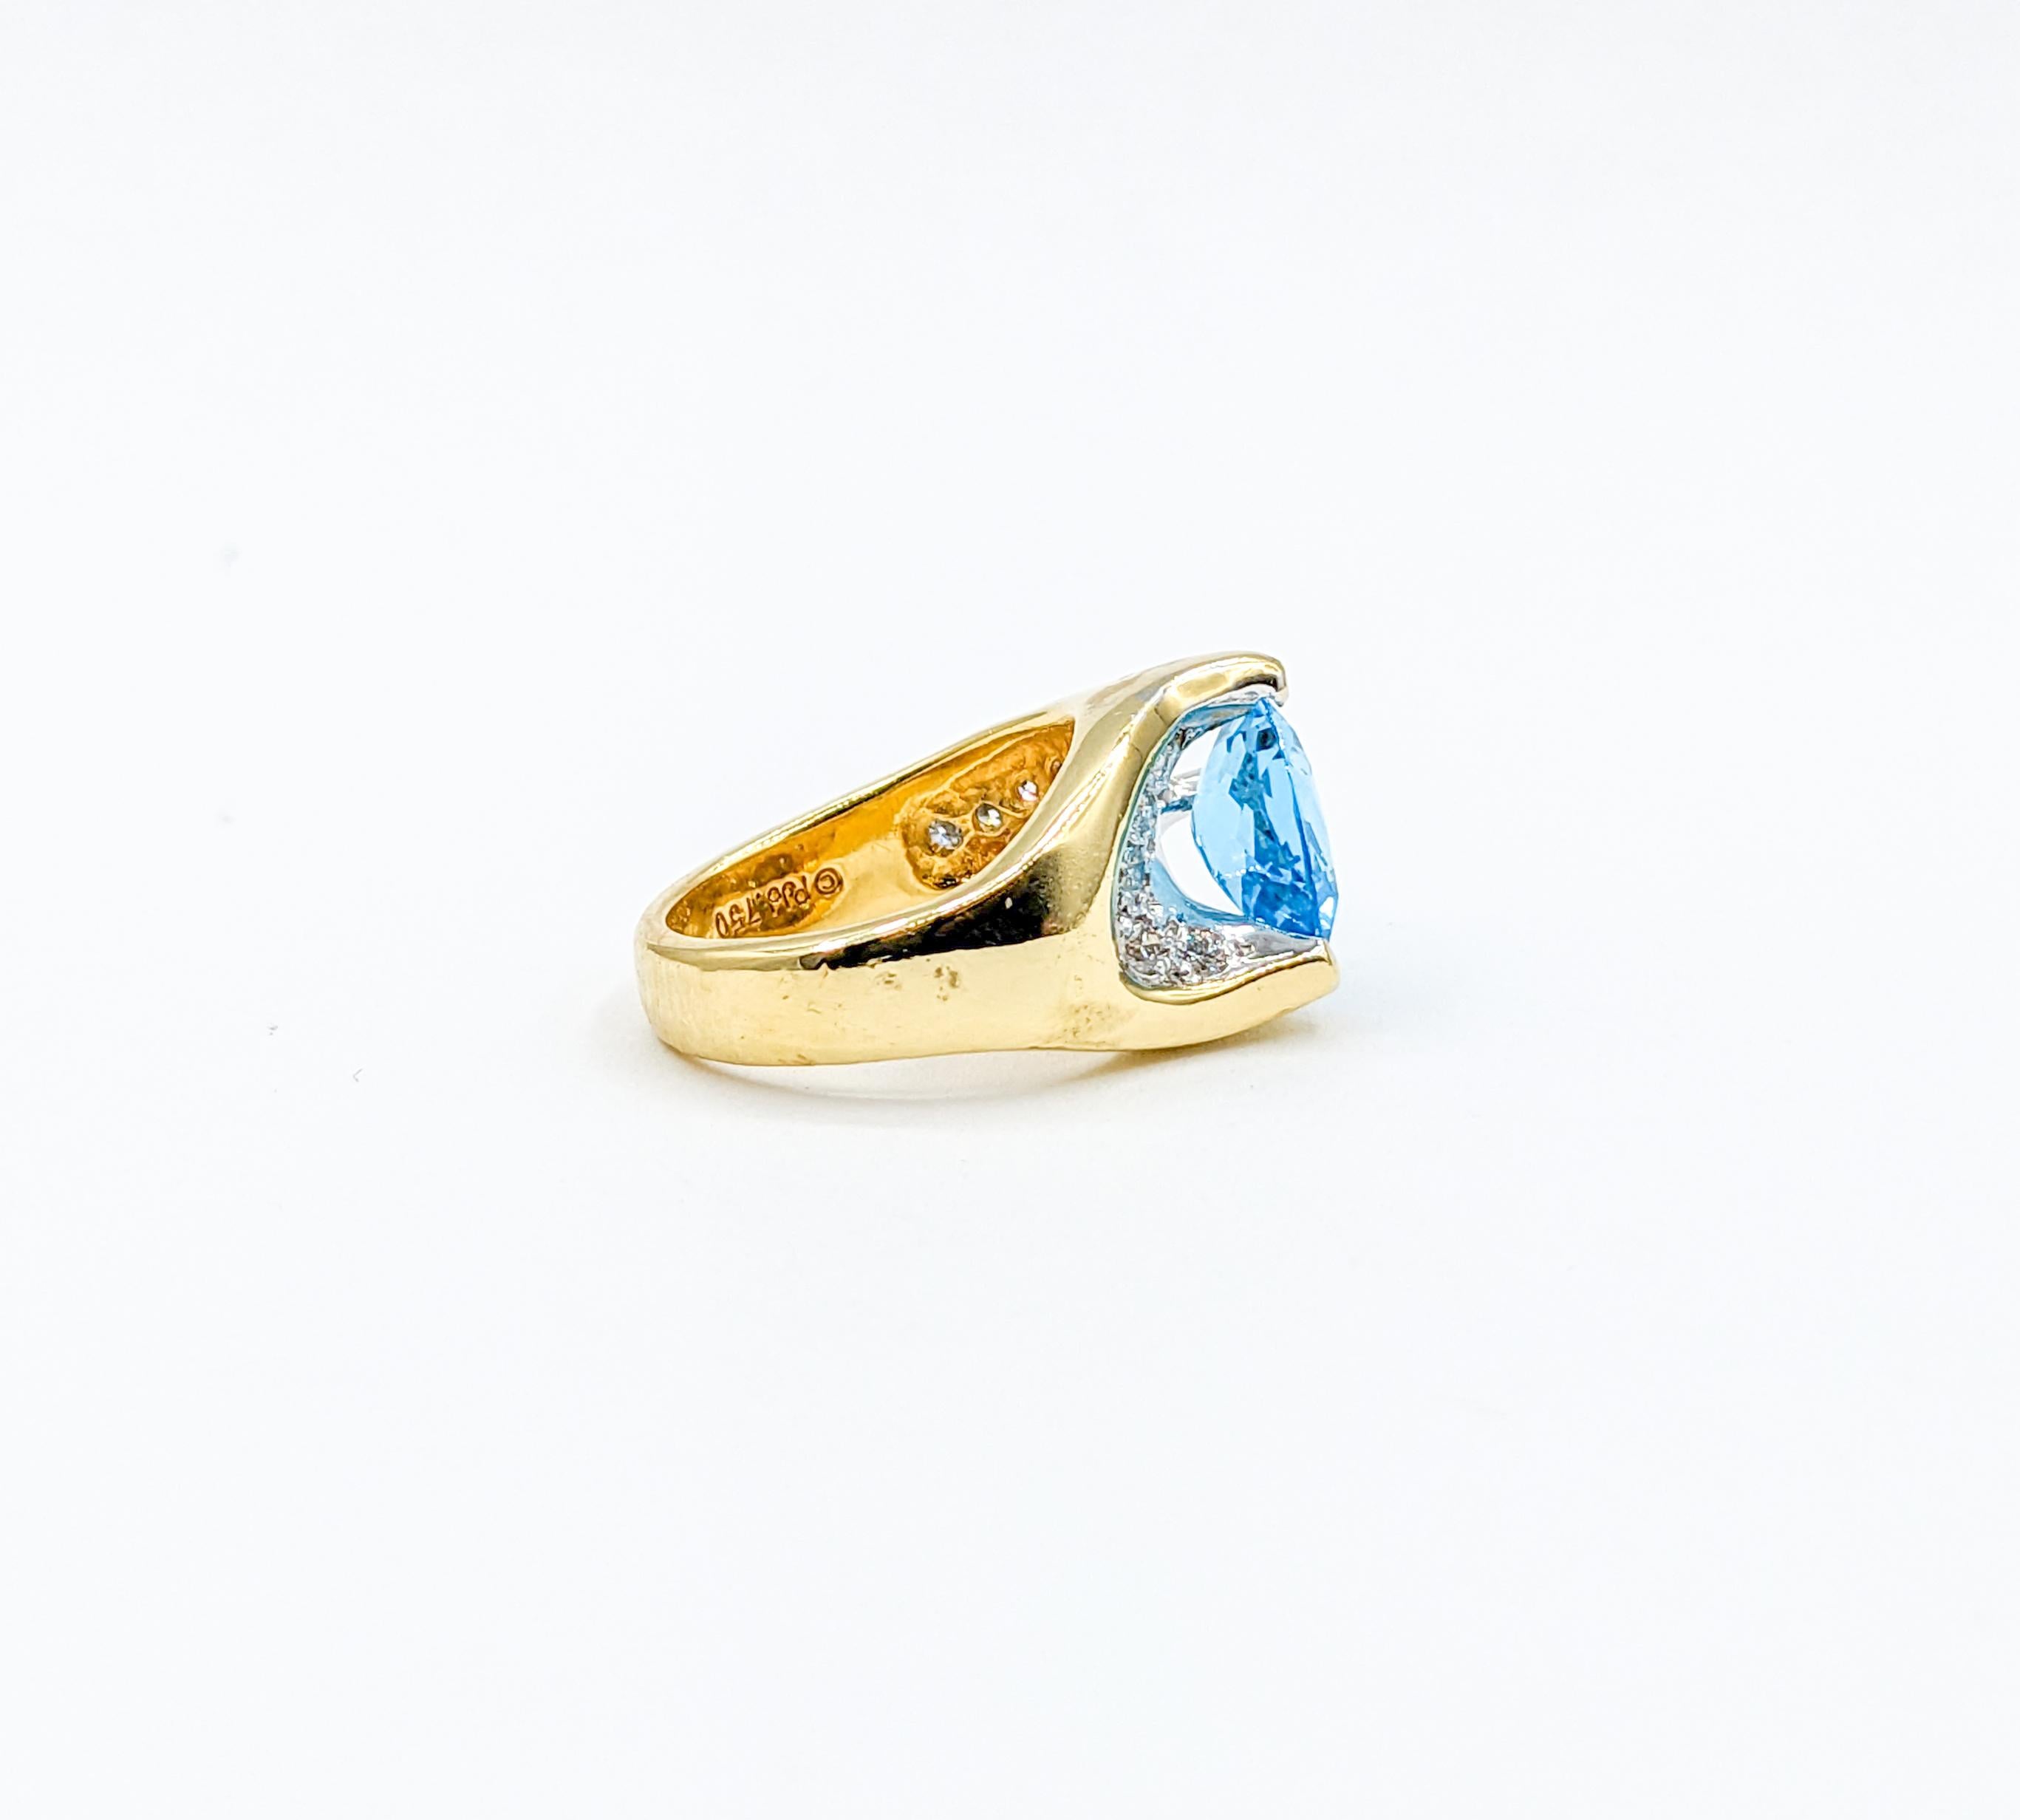 Artistic Blue Topaz & Diamond Cocktail Ring in 18k Gold For Sale 4